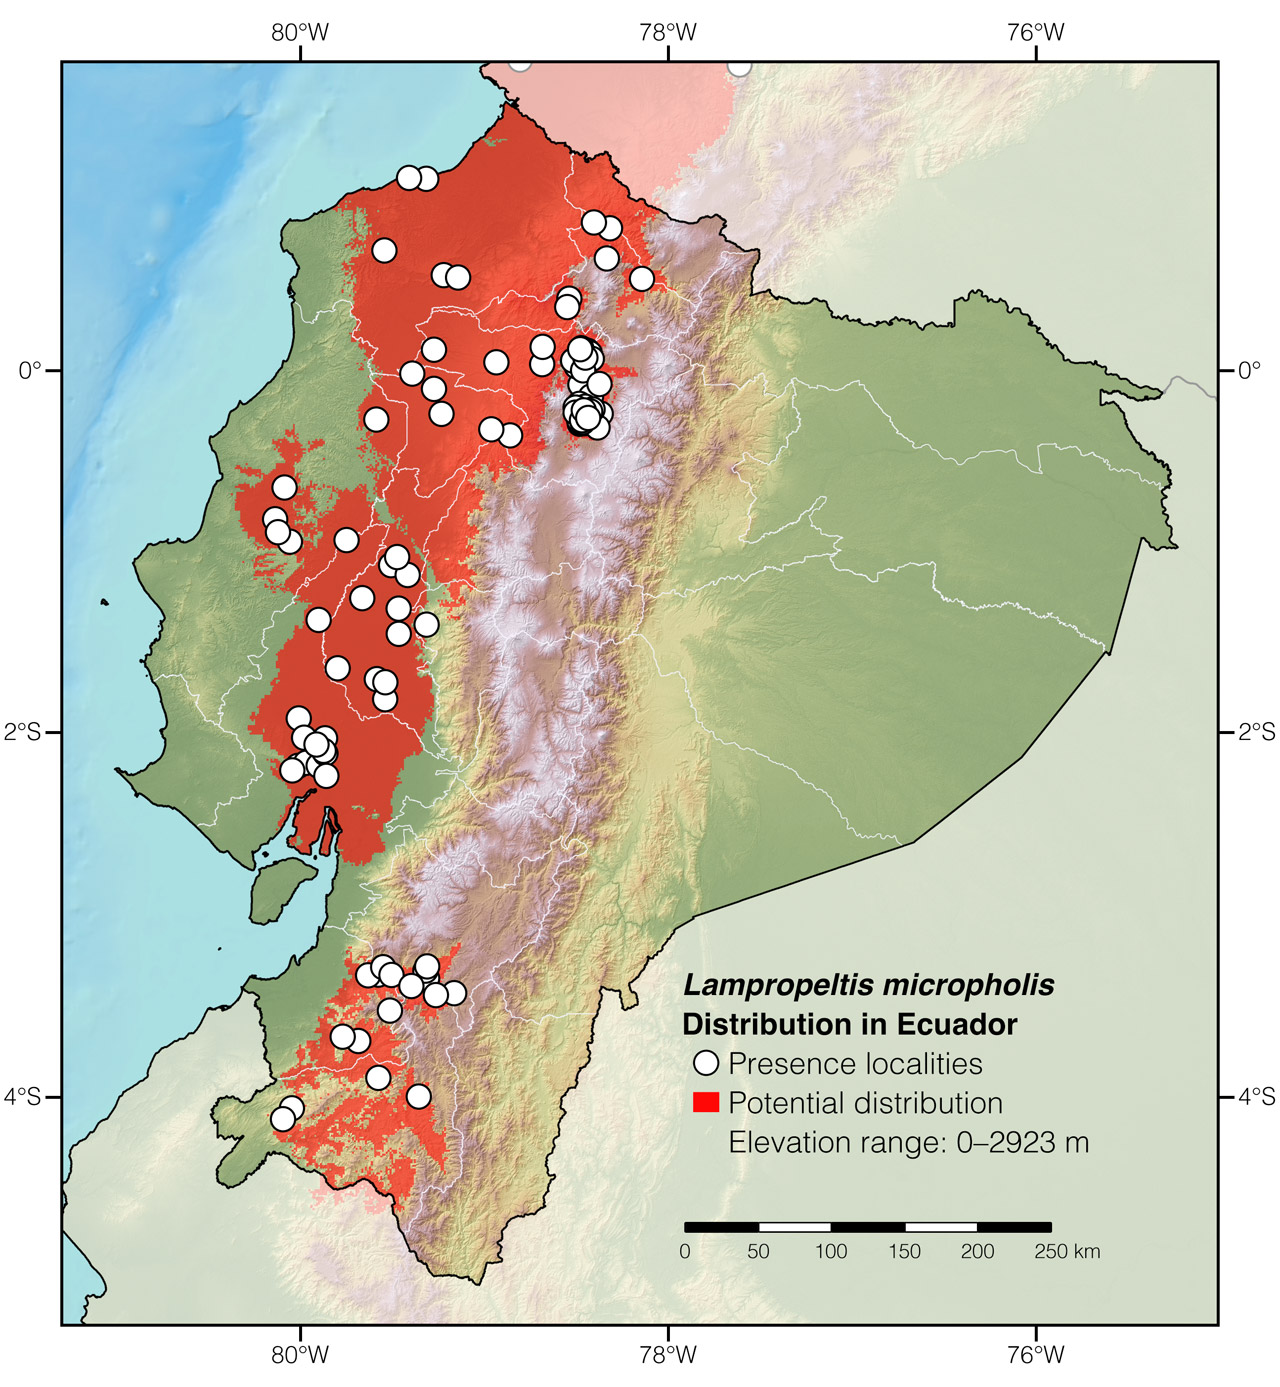 Distribution of Lampropeltis micropholis in Ecuador